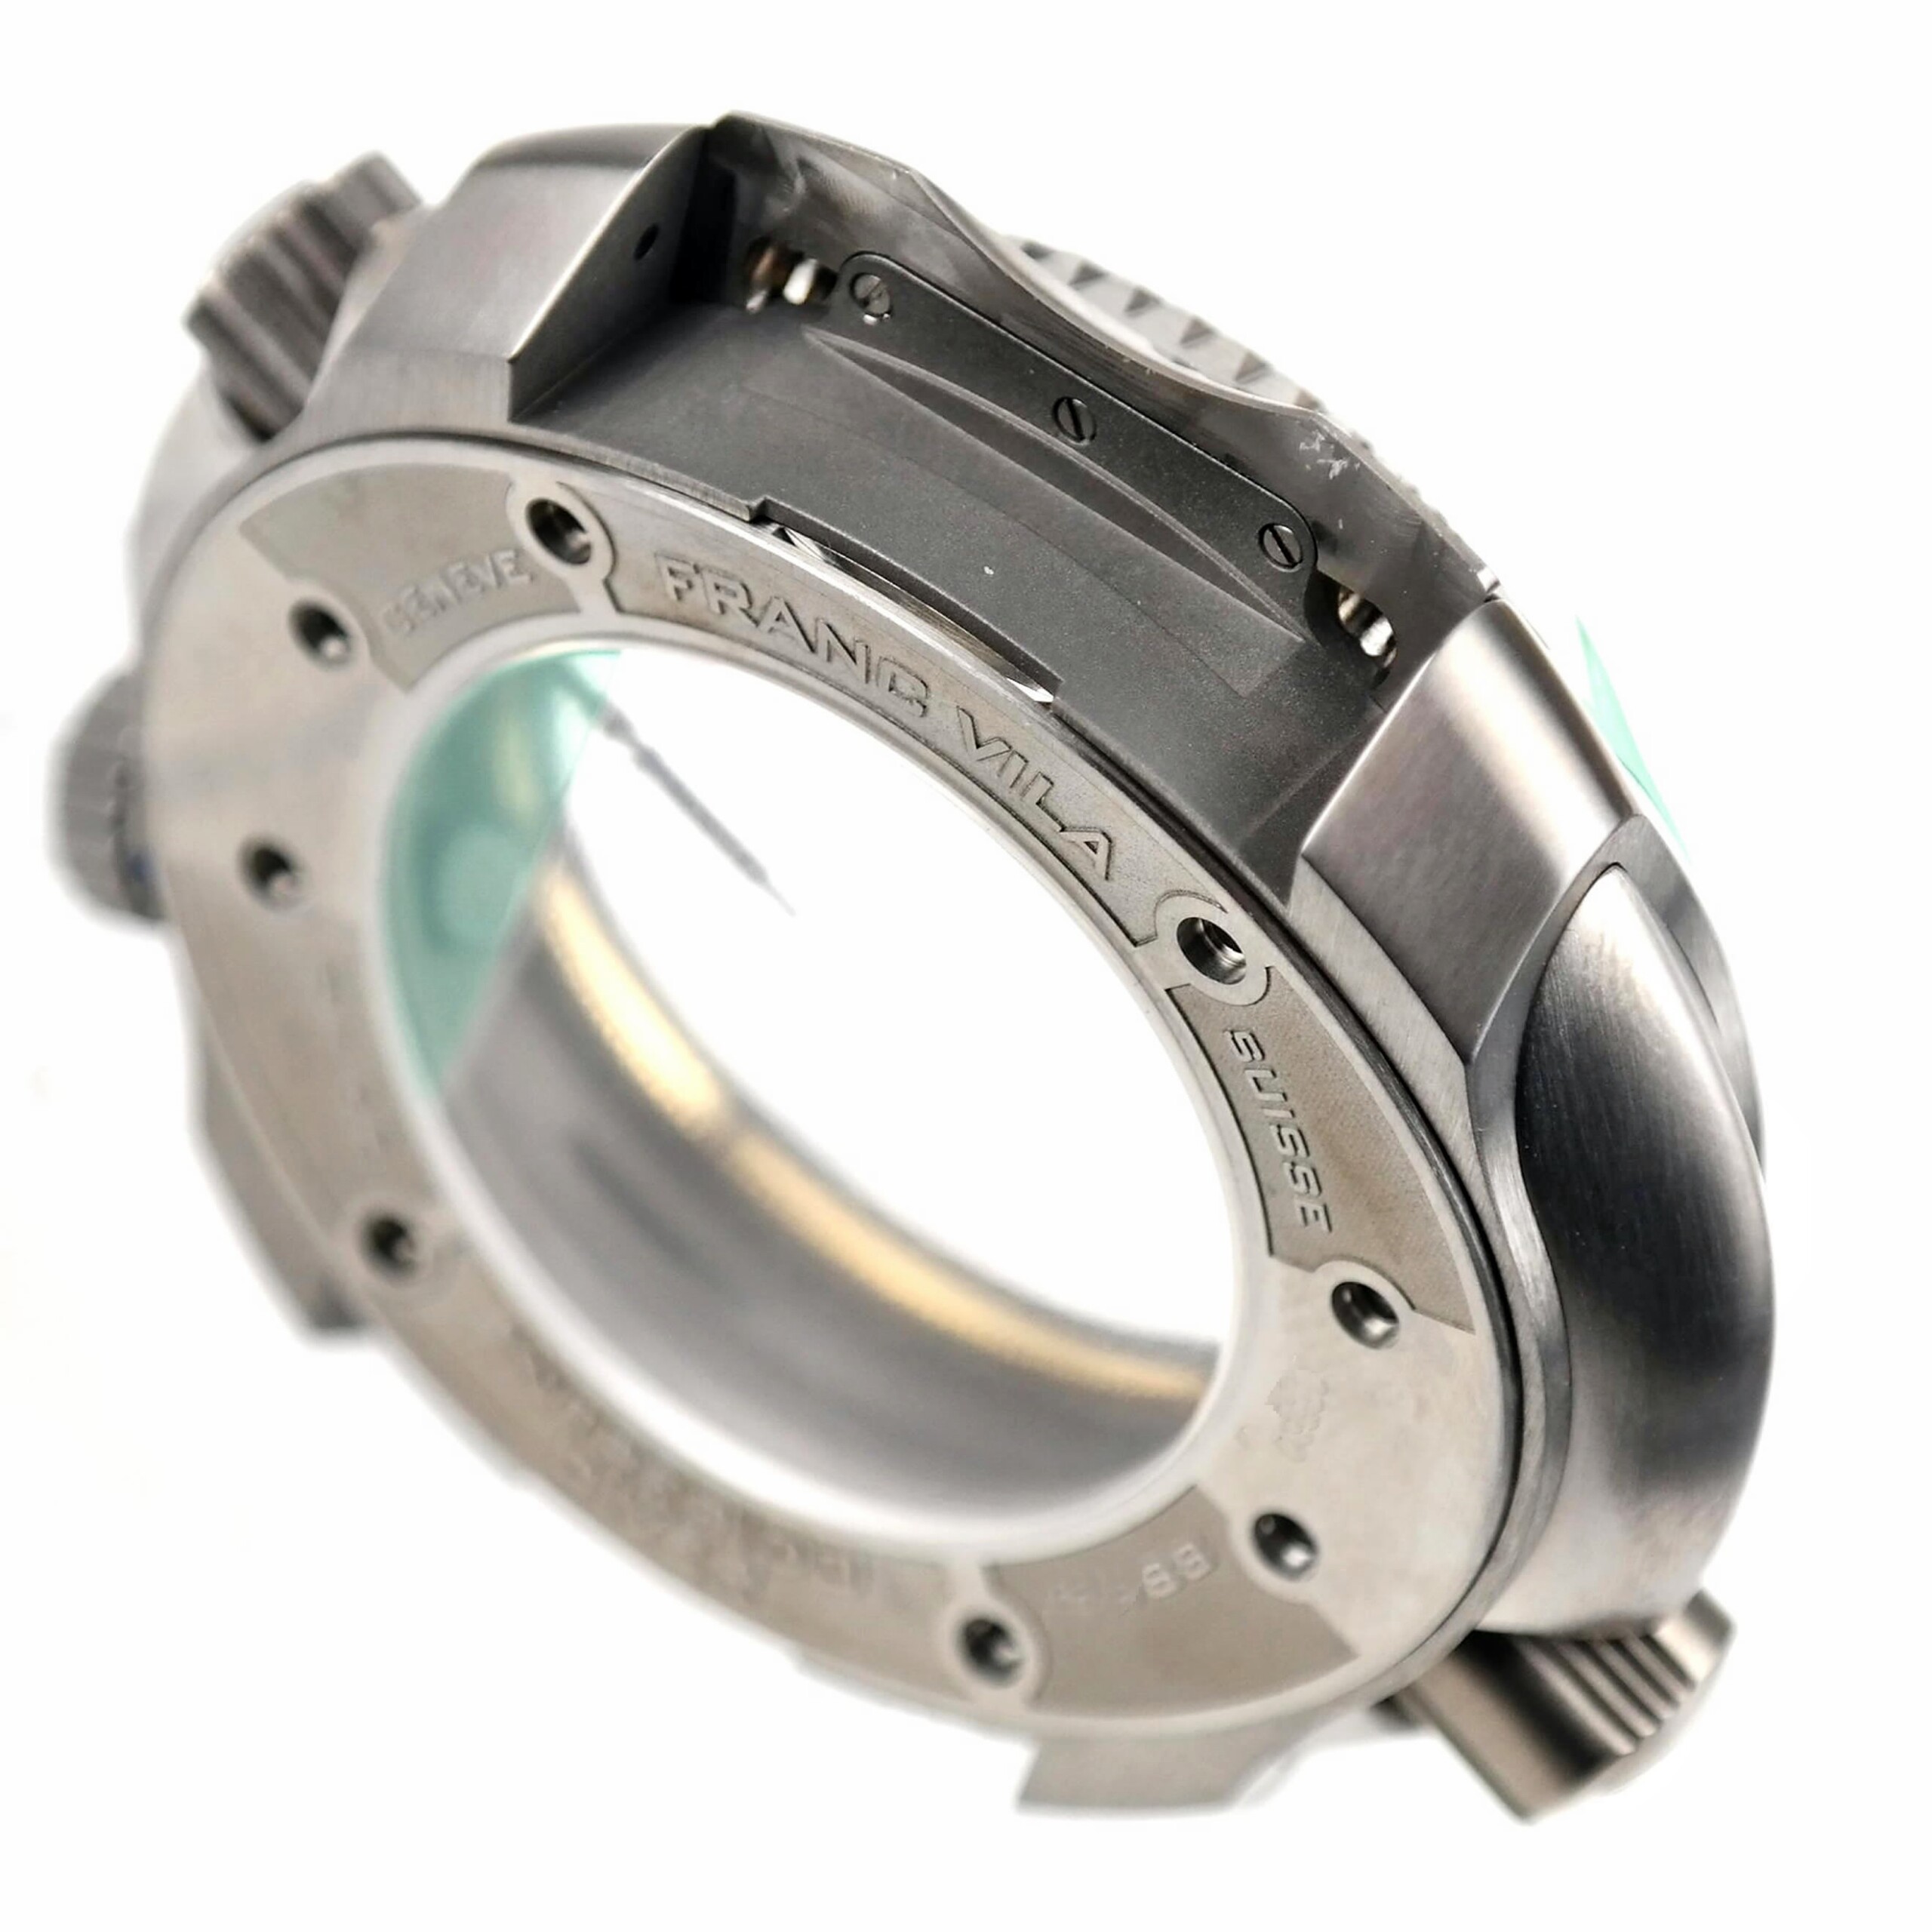 FRANC VILA - Intrepido Diver Superligero FVi 62 - WR 300 m - Original Watch Case